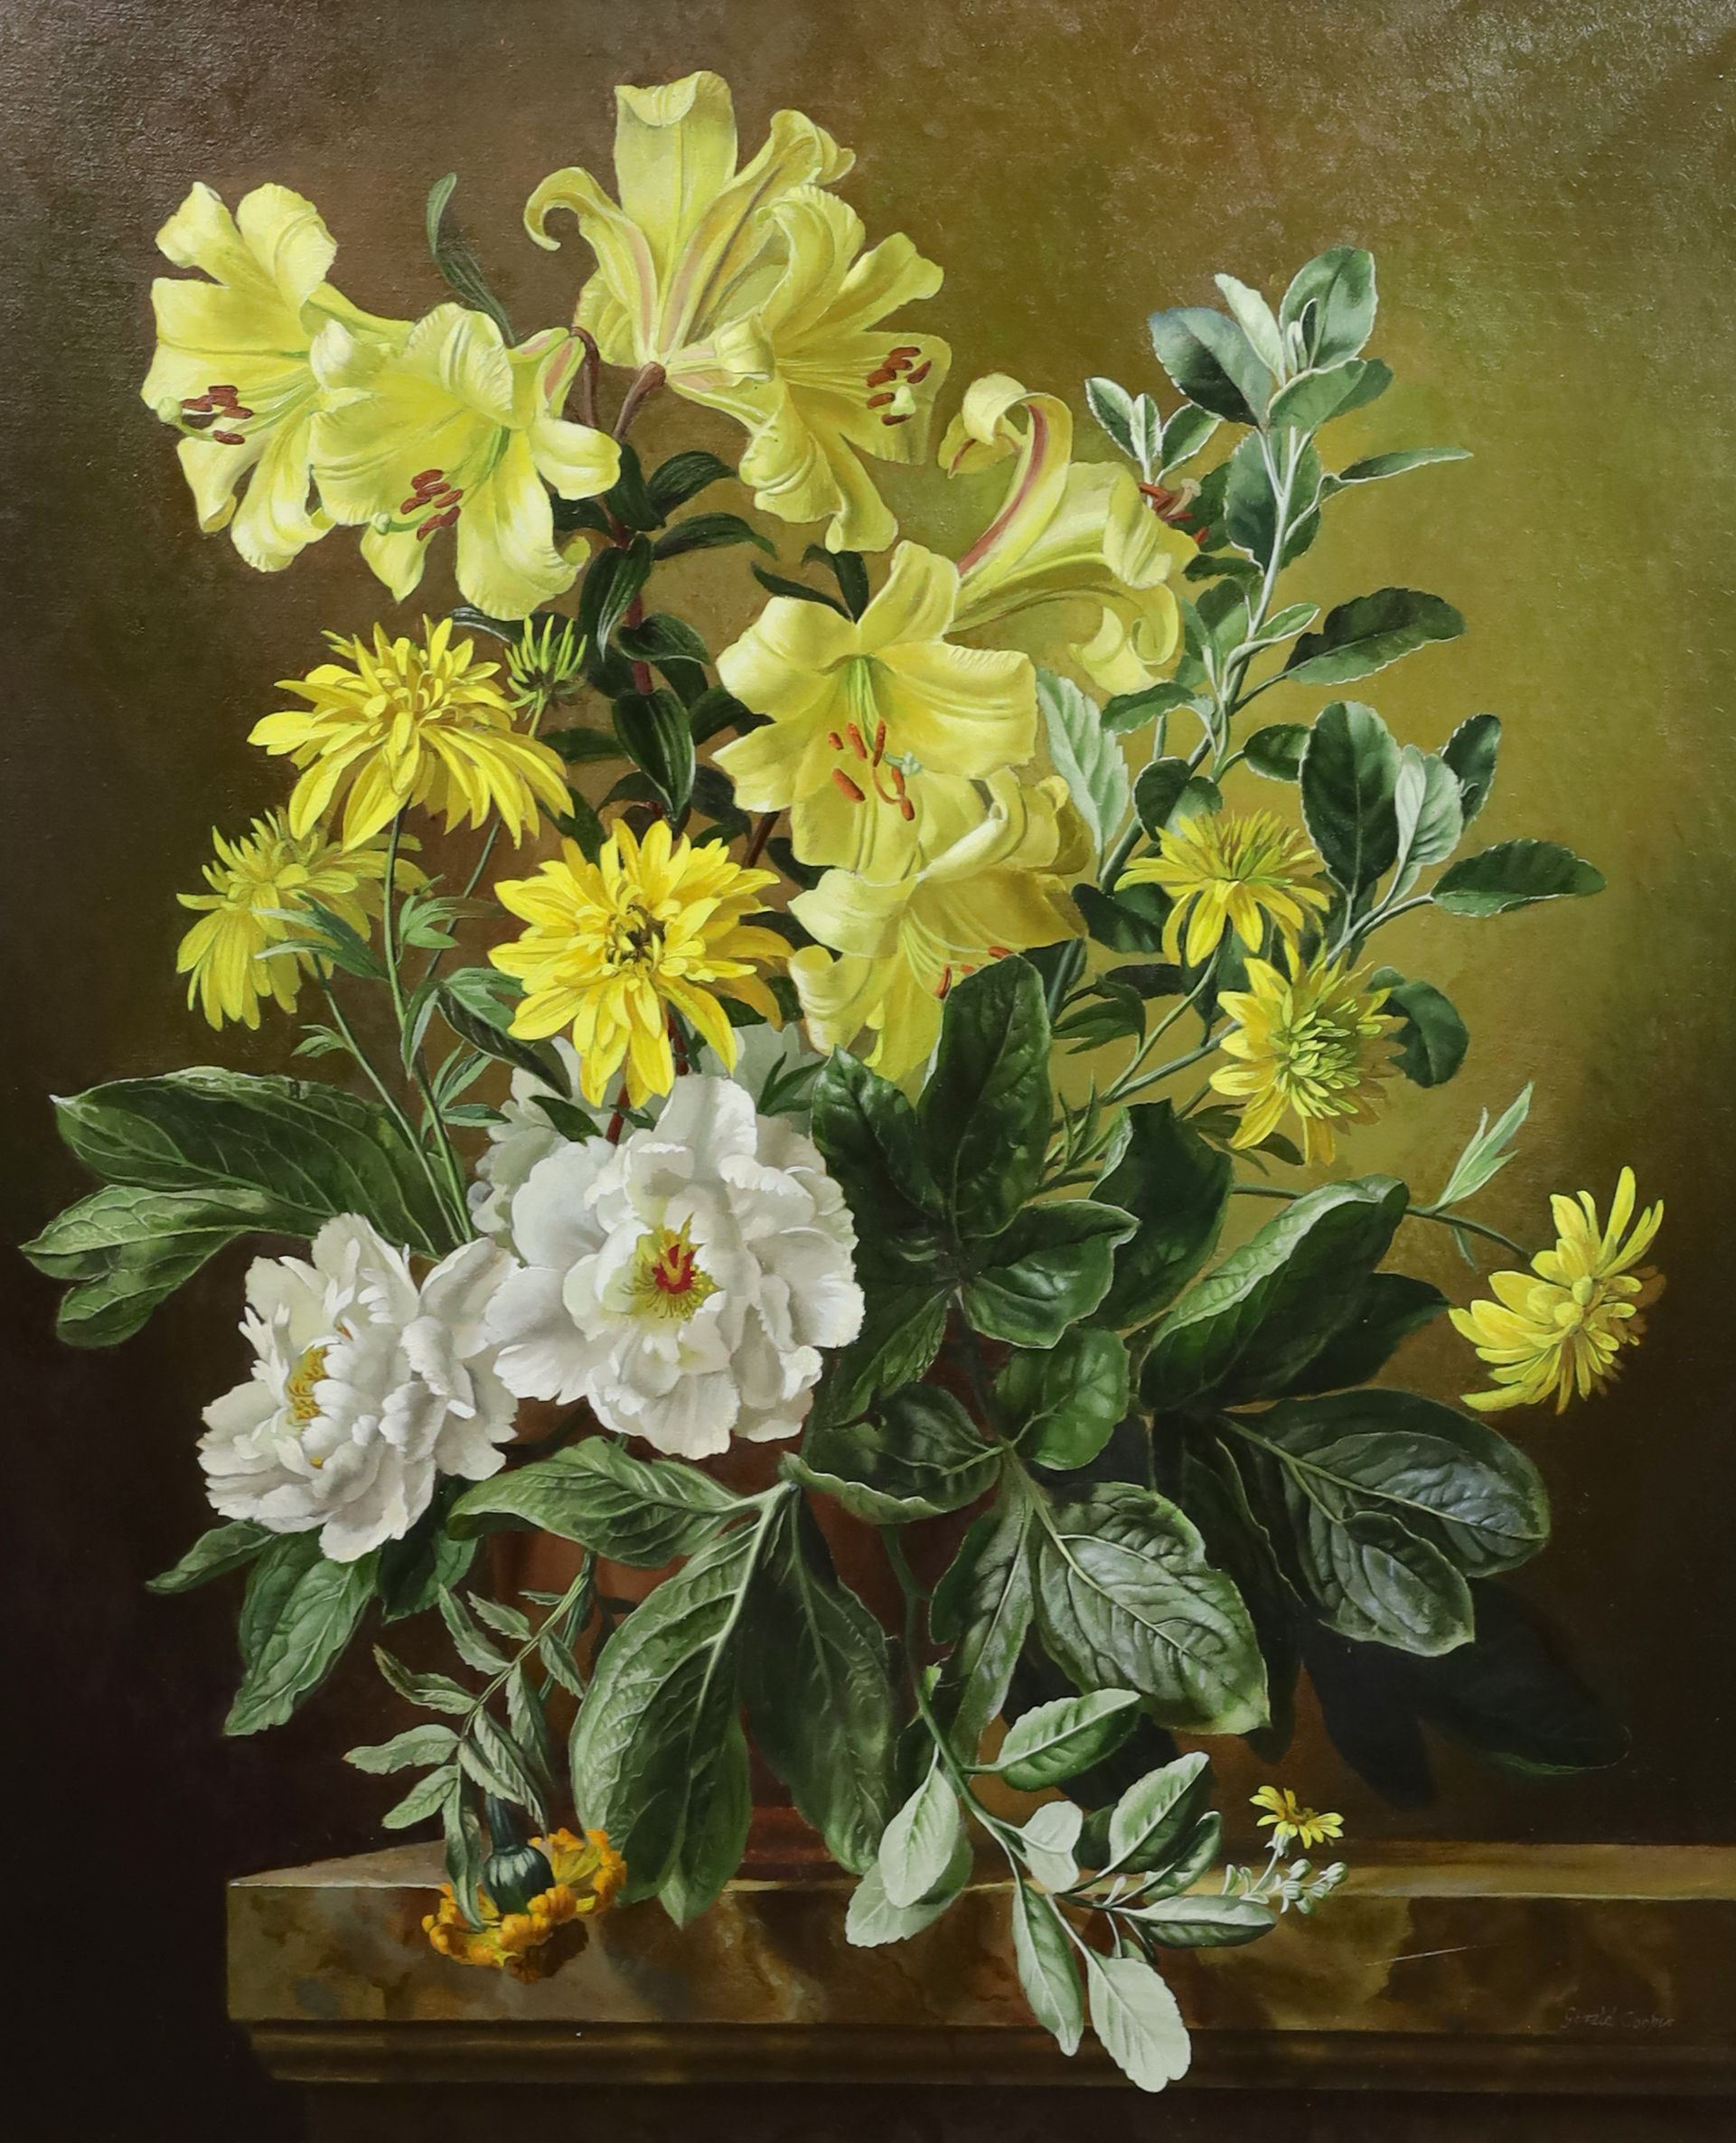 Gerald A. Cooper (1898-1975), 'Flowerpiece', oil on canvas, 75 x 62cm